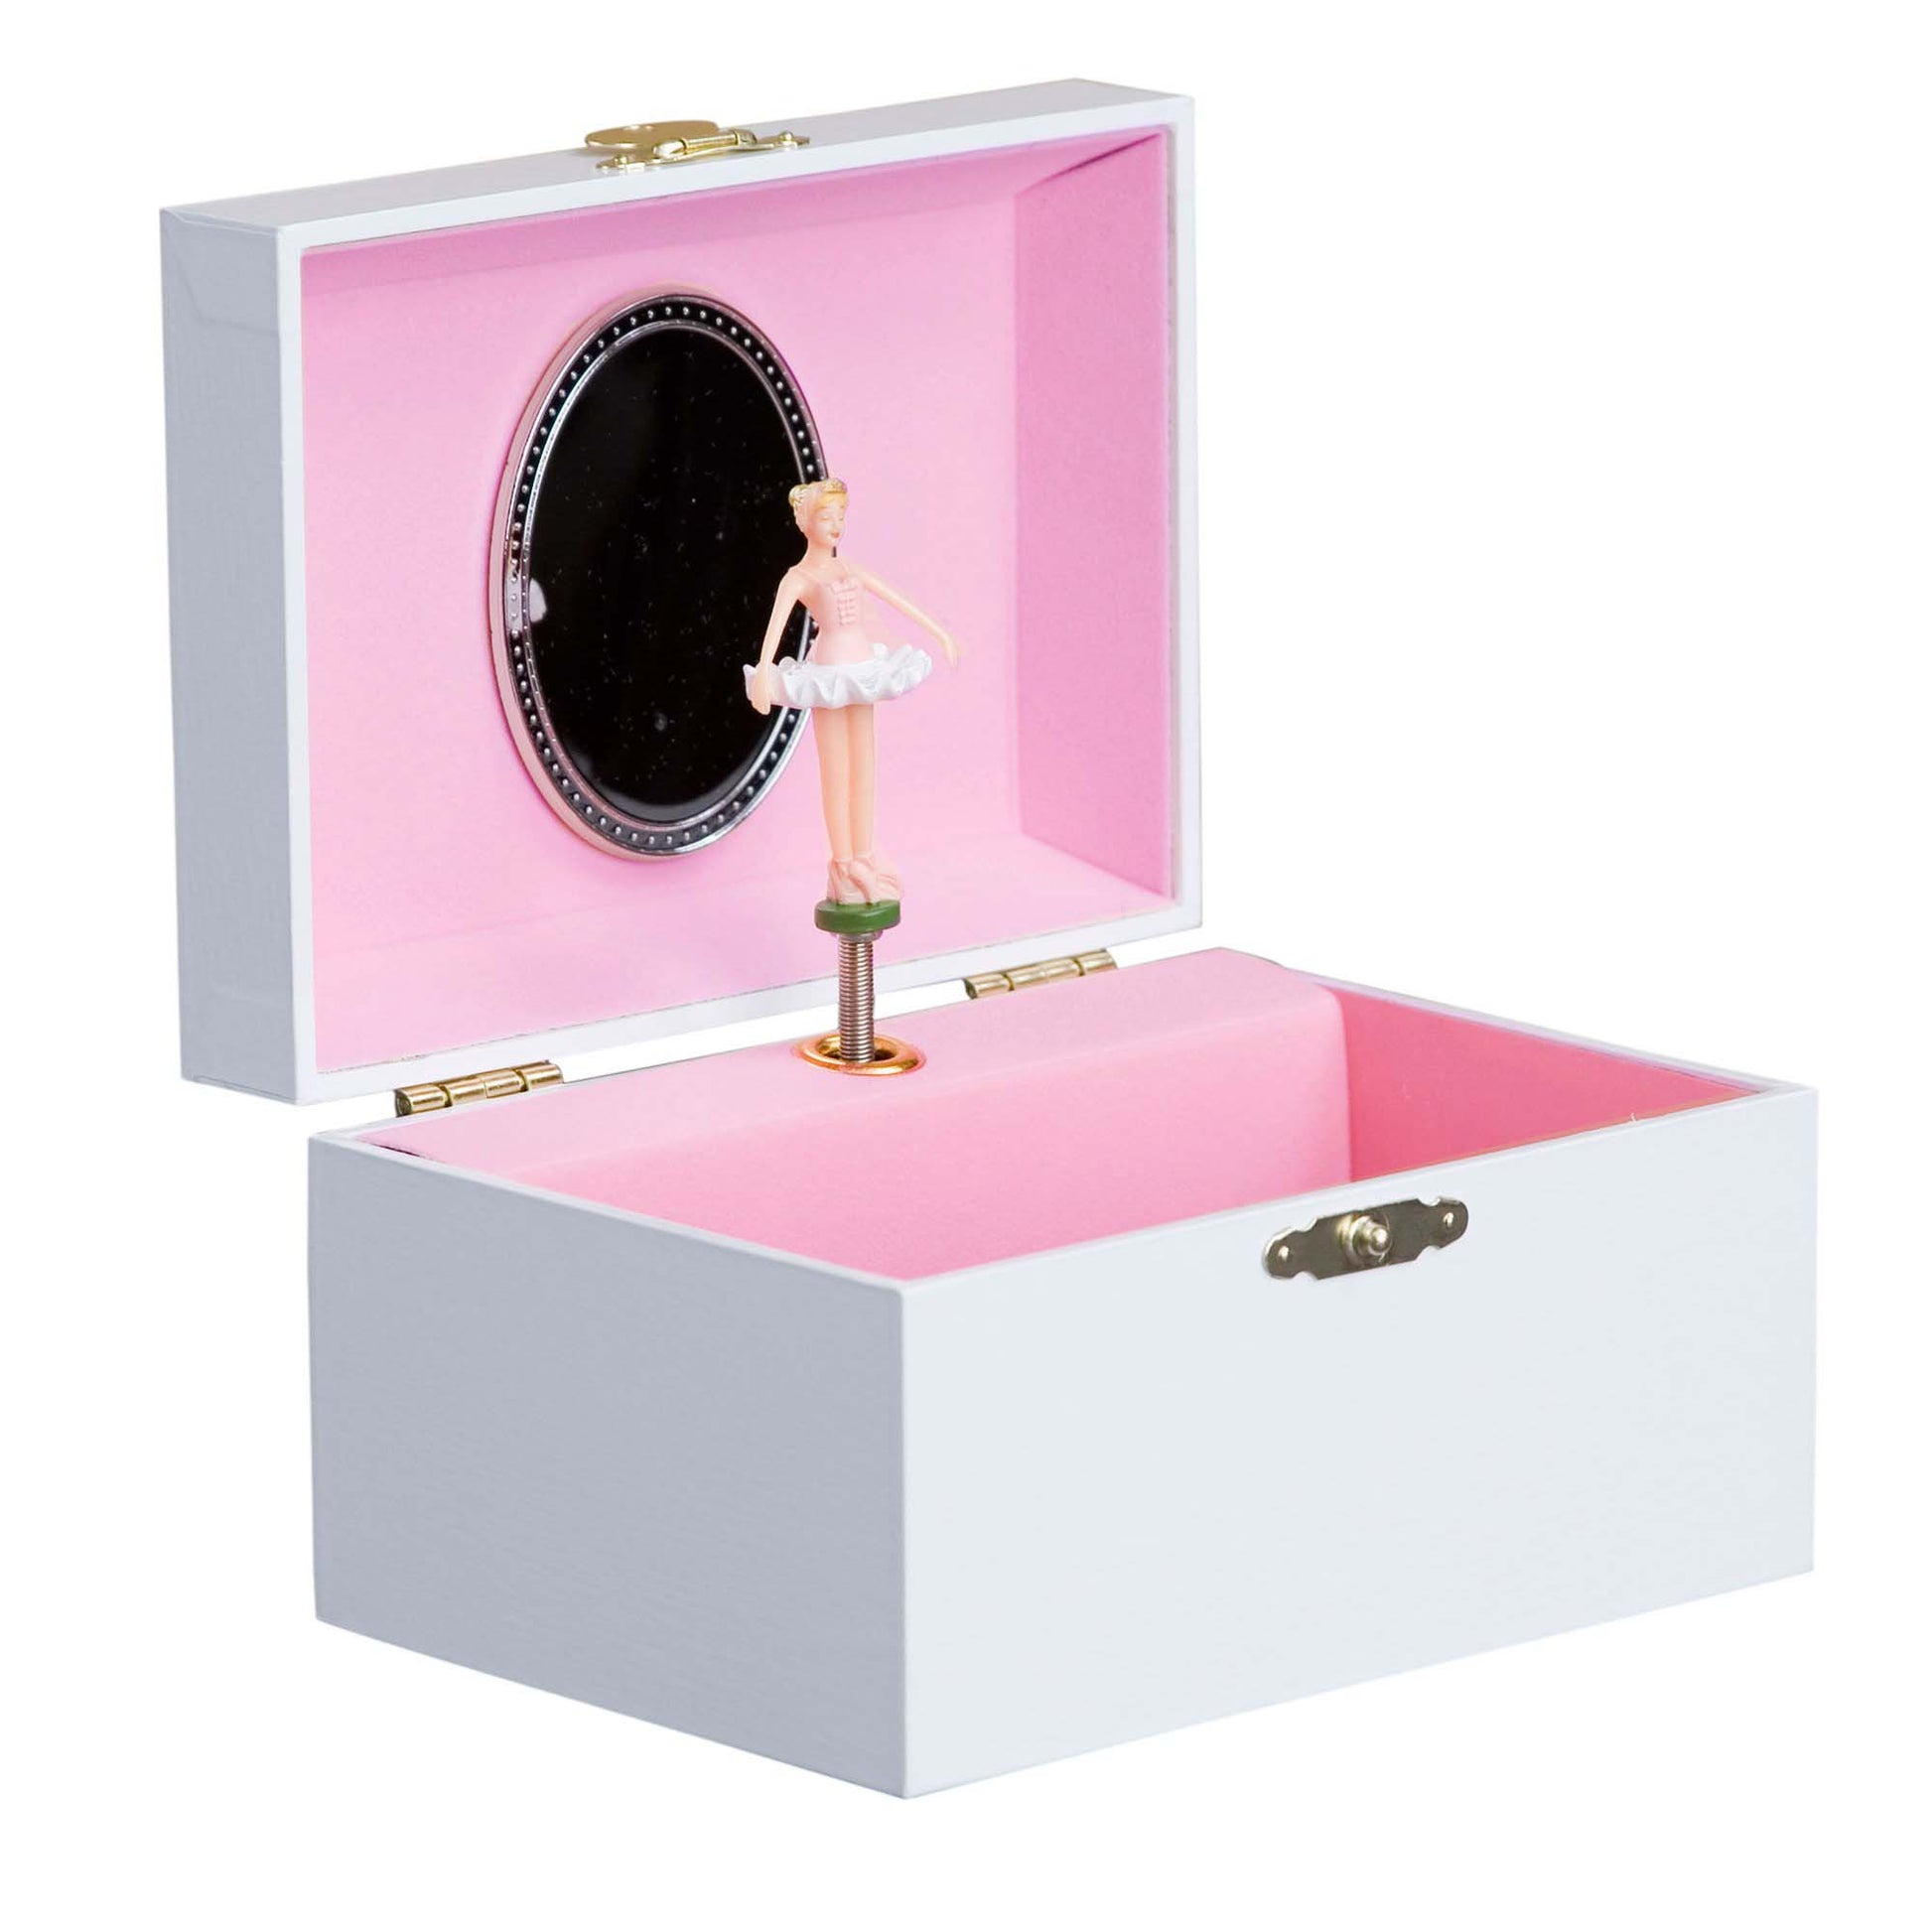 Personalized Ballerina Jewelry Box with Soccer Balls design